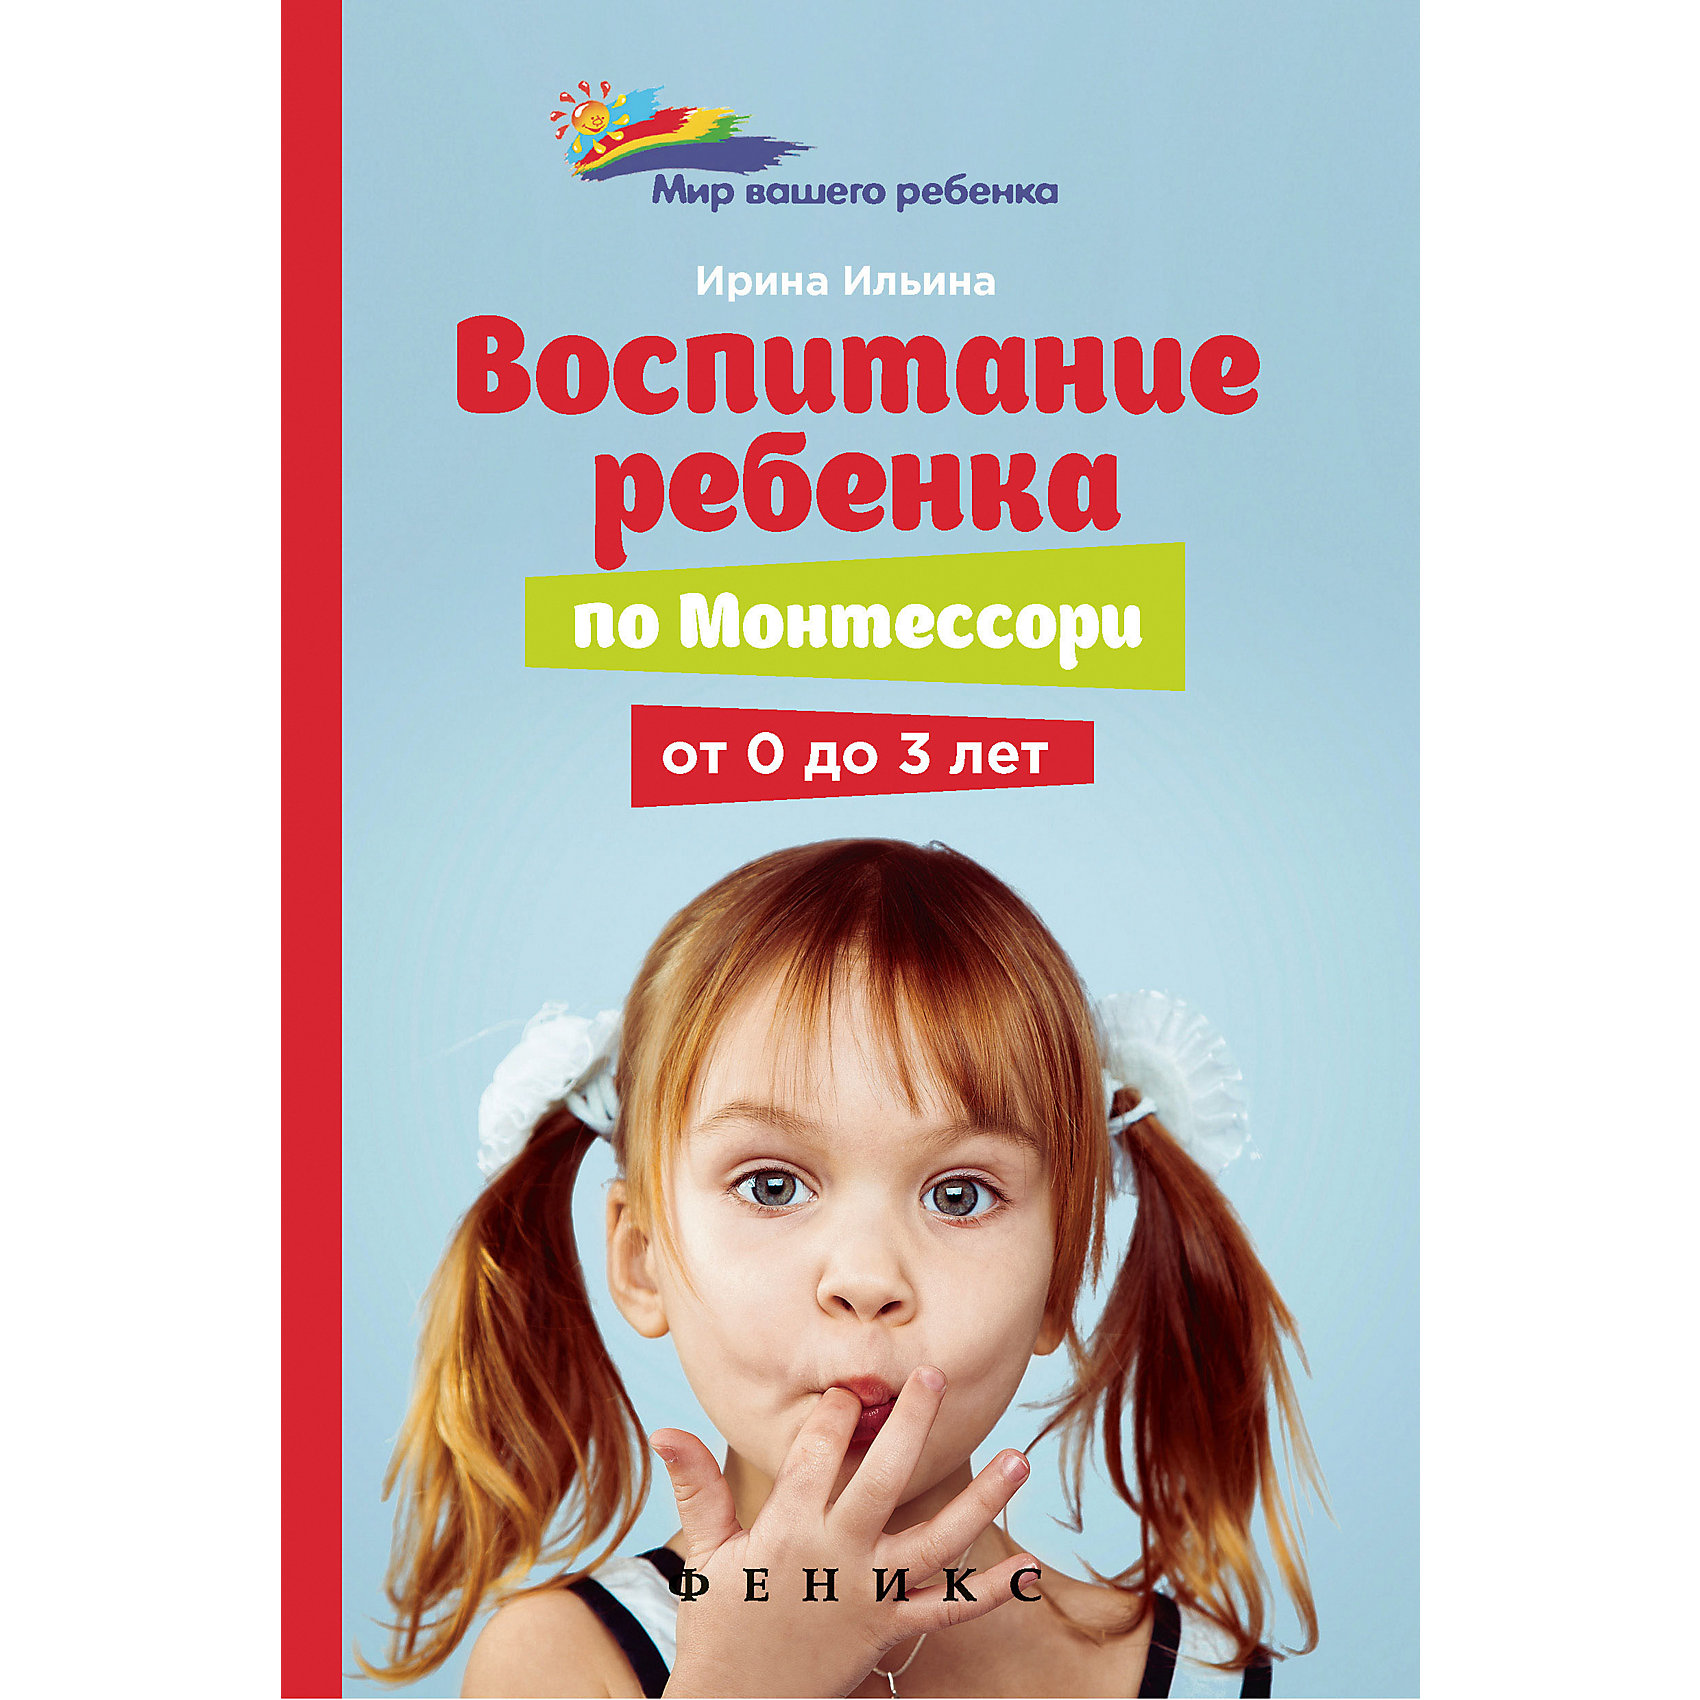 фото Книга для родителей "Мир вашего ребёнка" Воспитание ребенка от Монтессори от 0 до 3 лет, И. Ильина Fenix